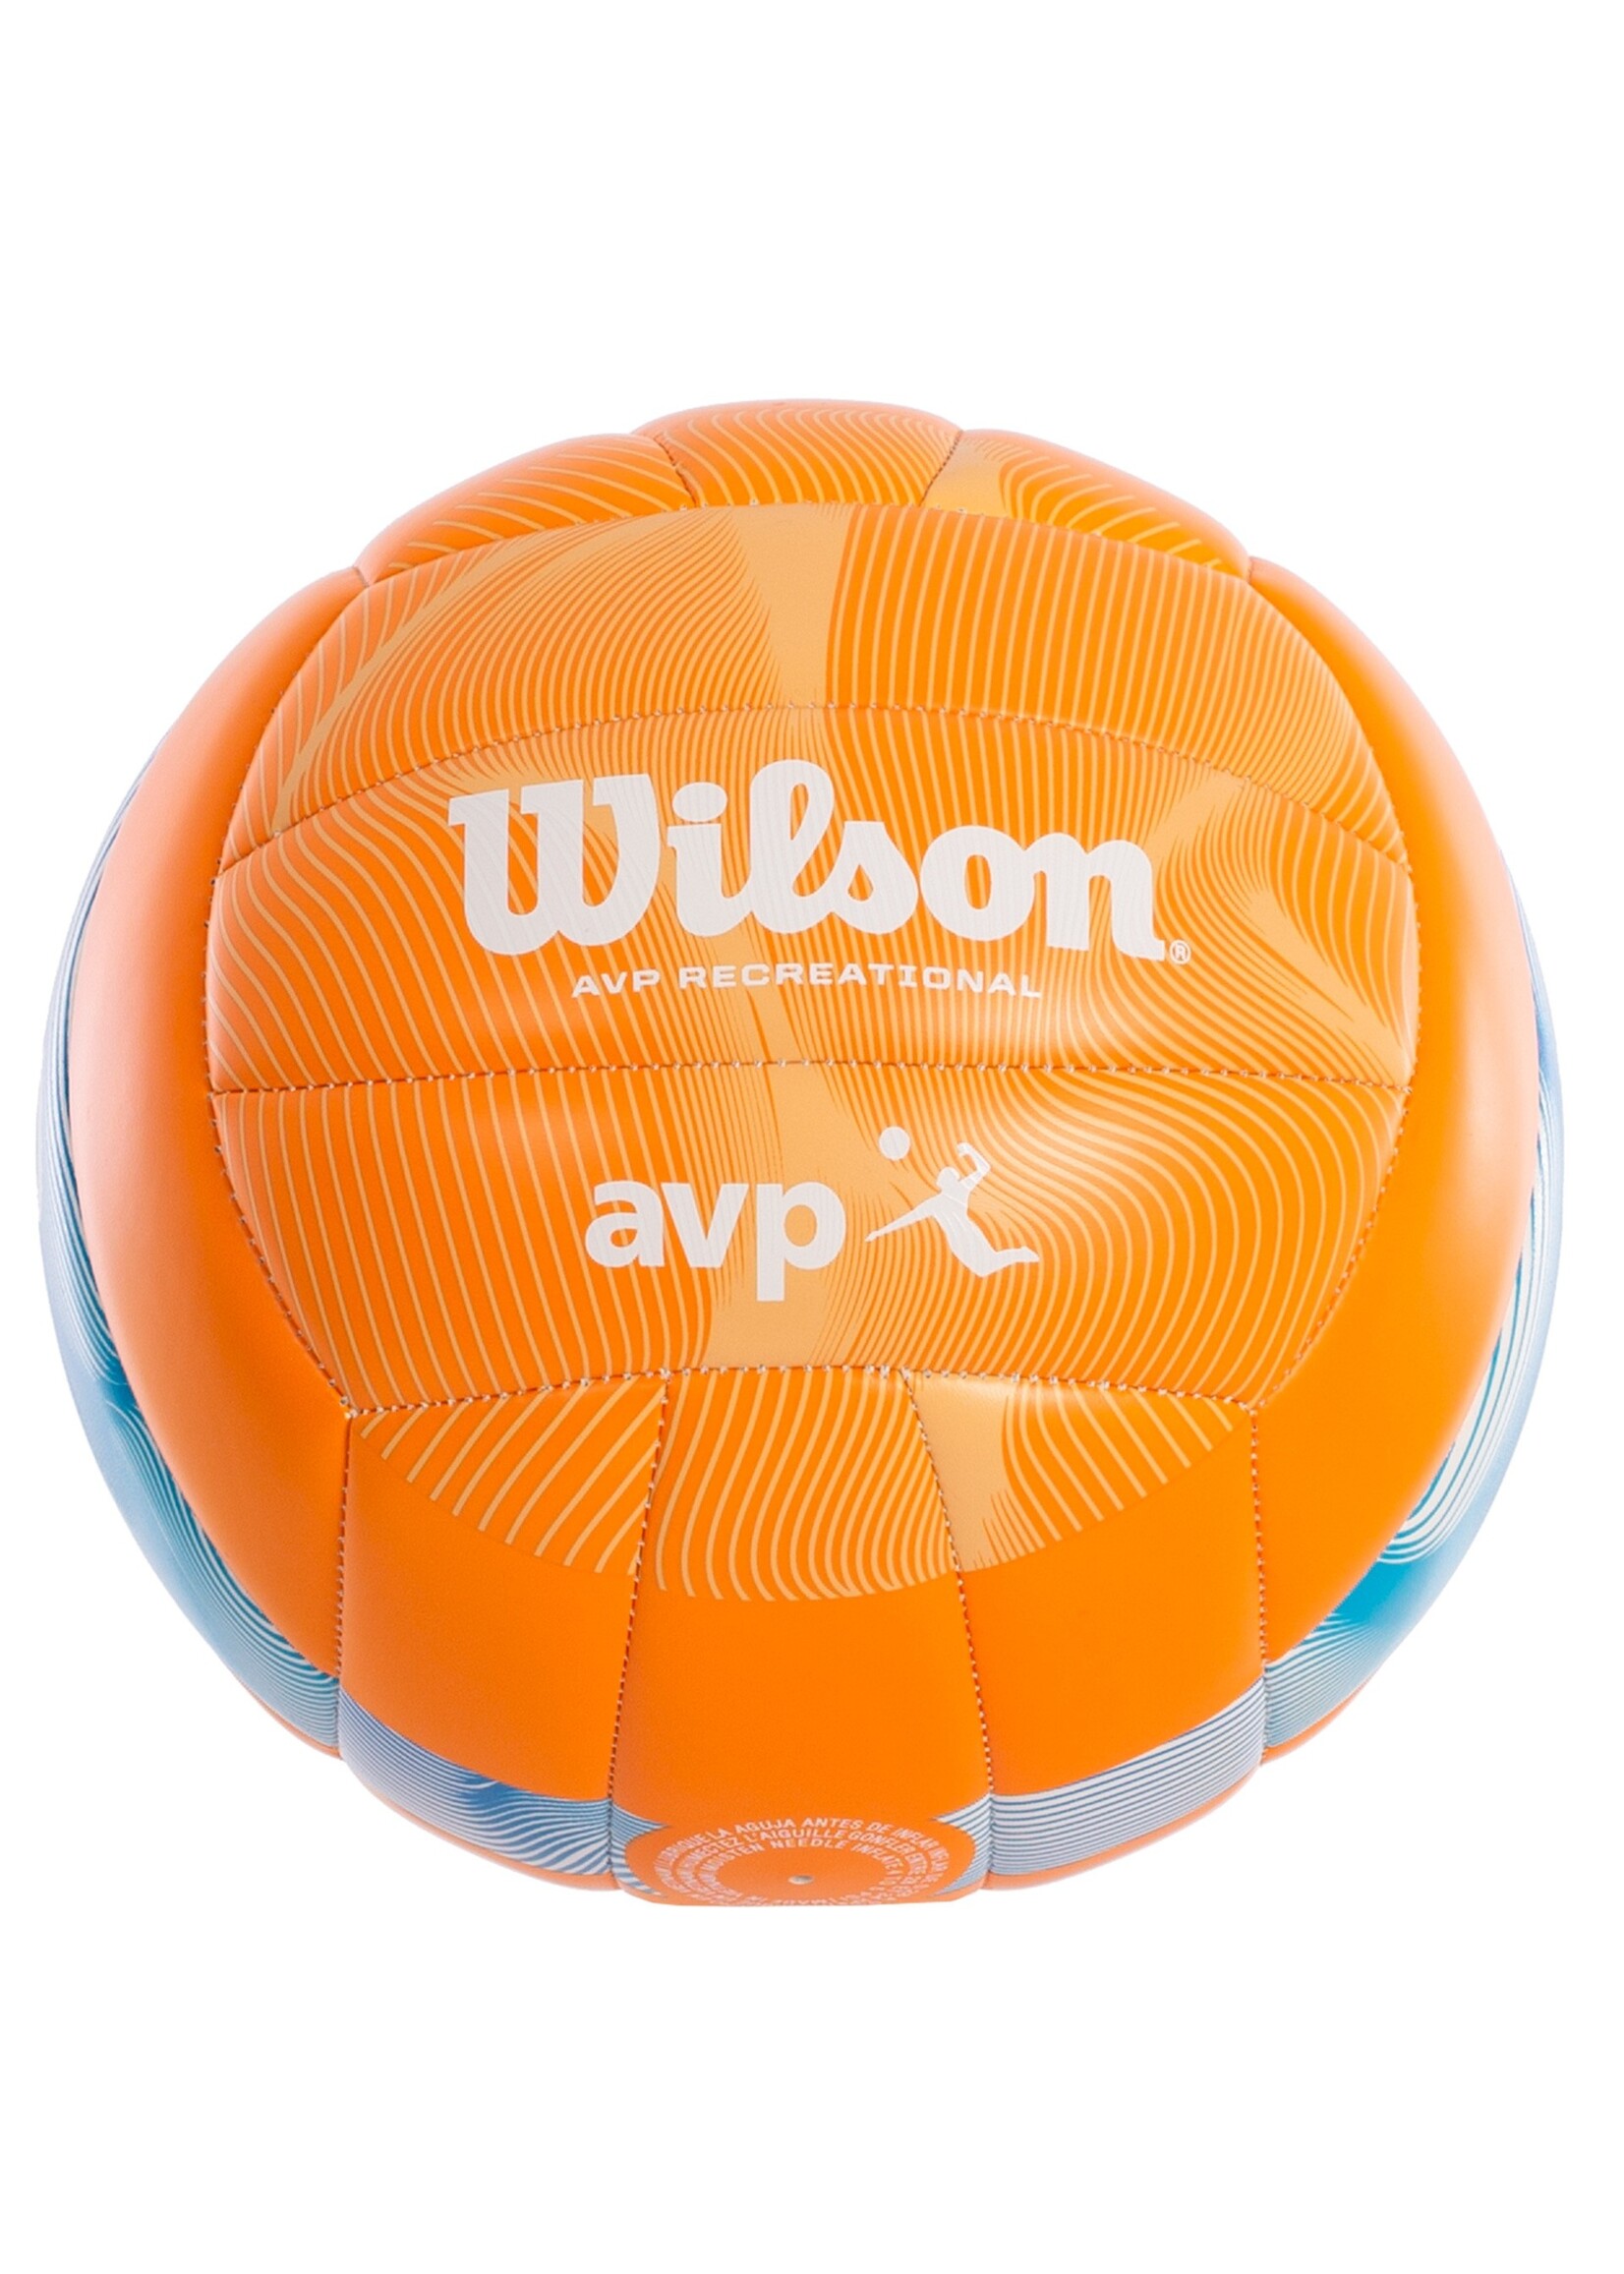 WILSON AVP MOVEMENT VB Orange/Blue 